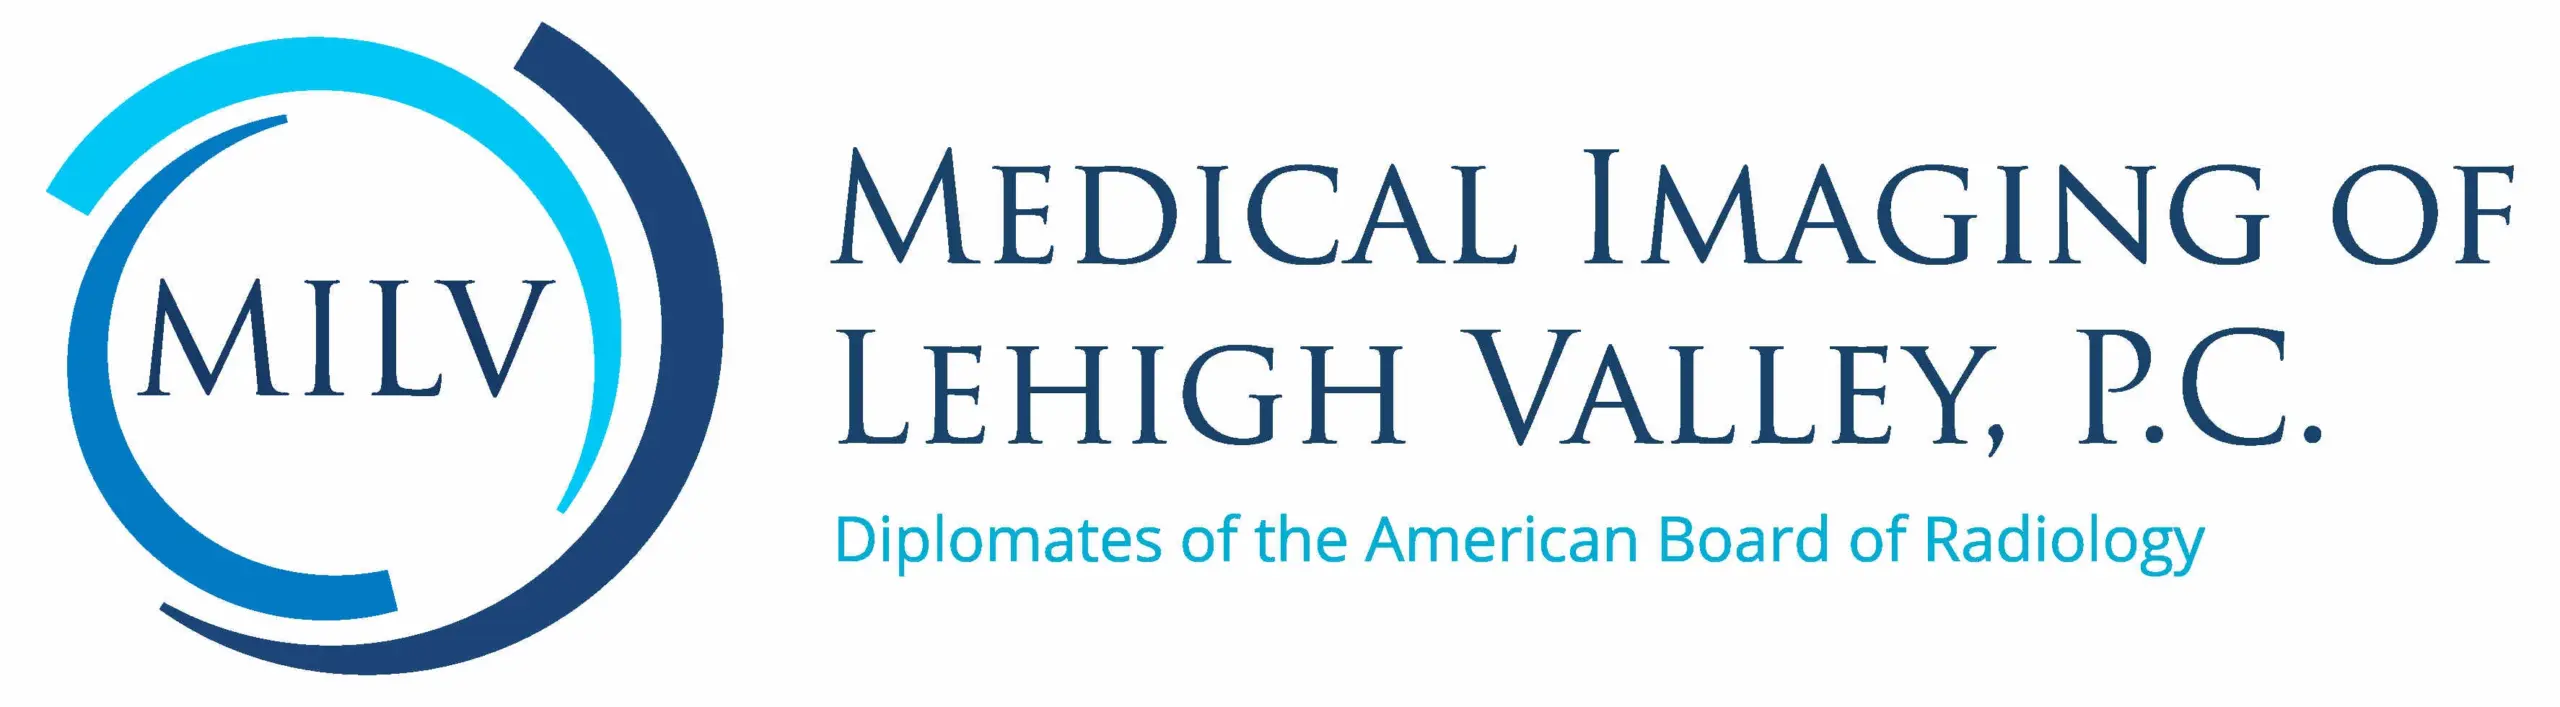 Medical Imaging of Lehigh Valley